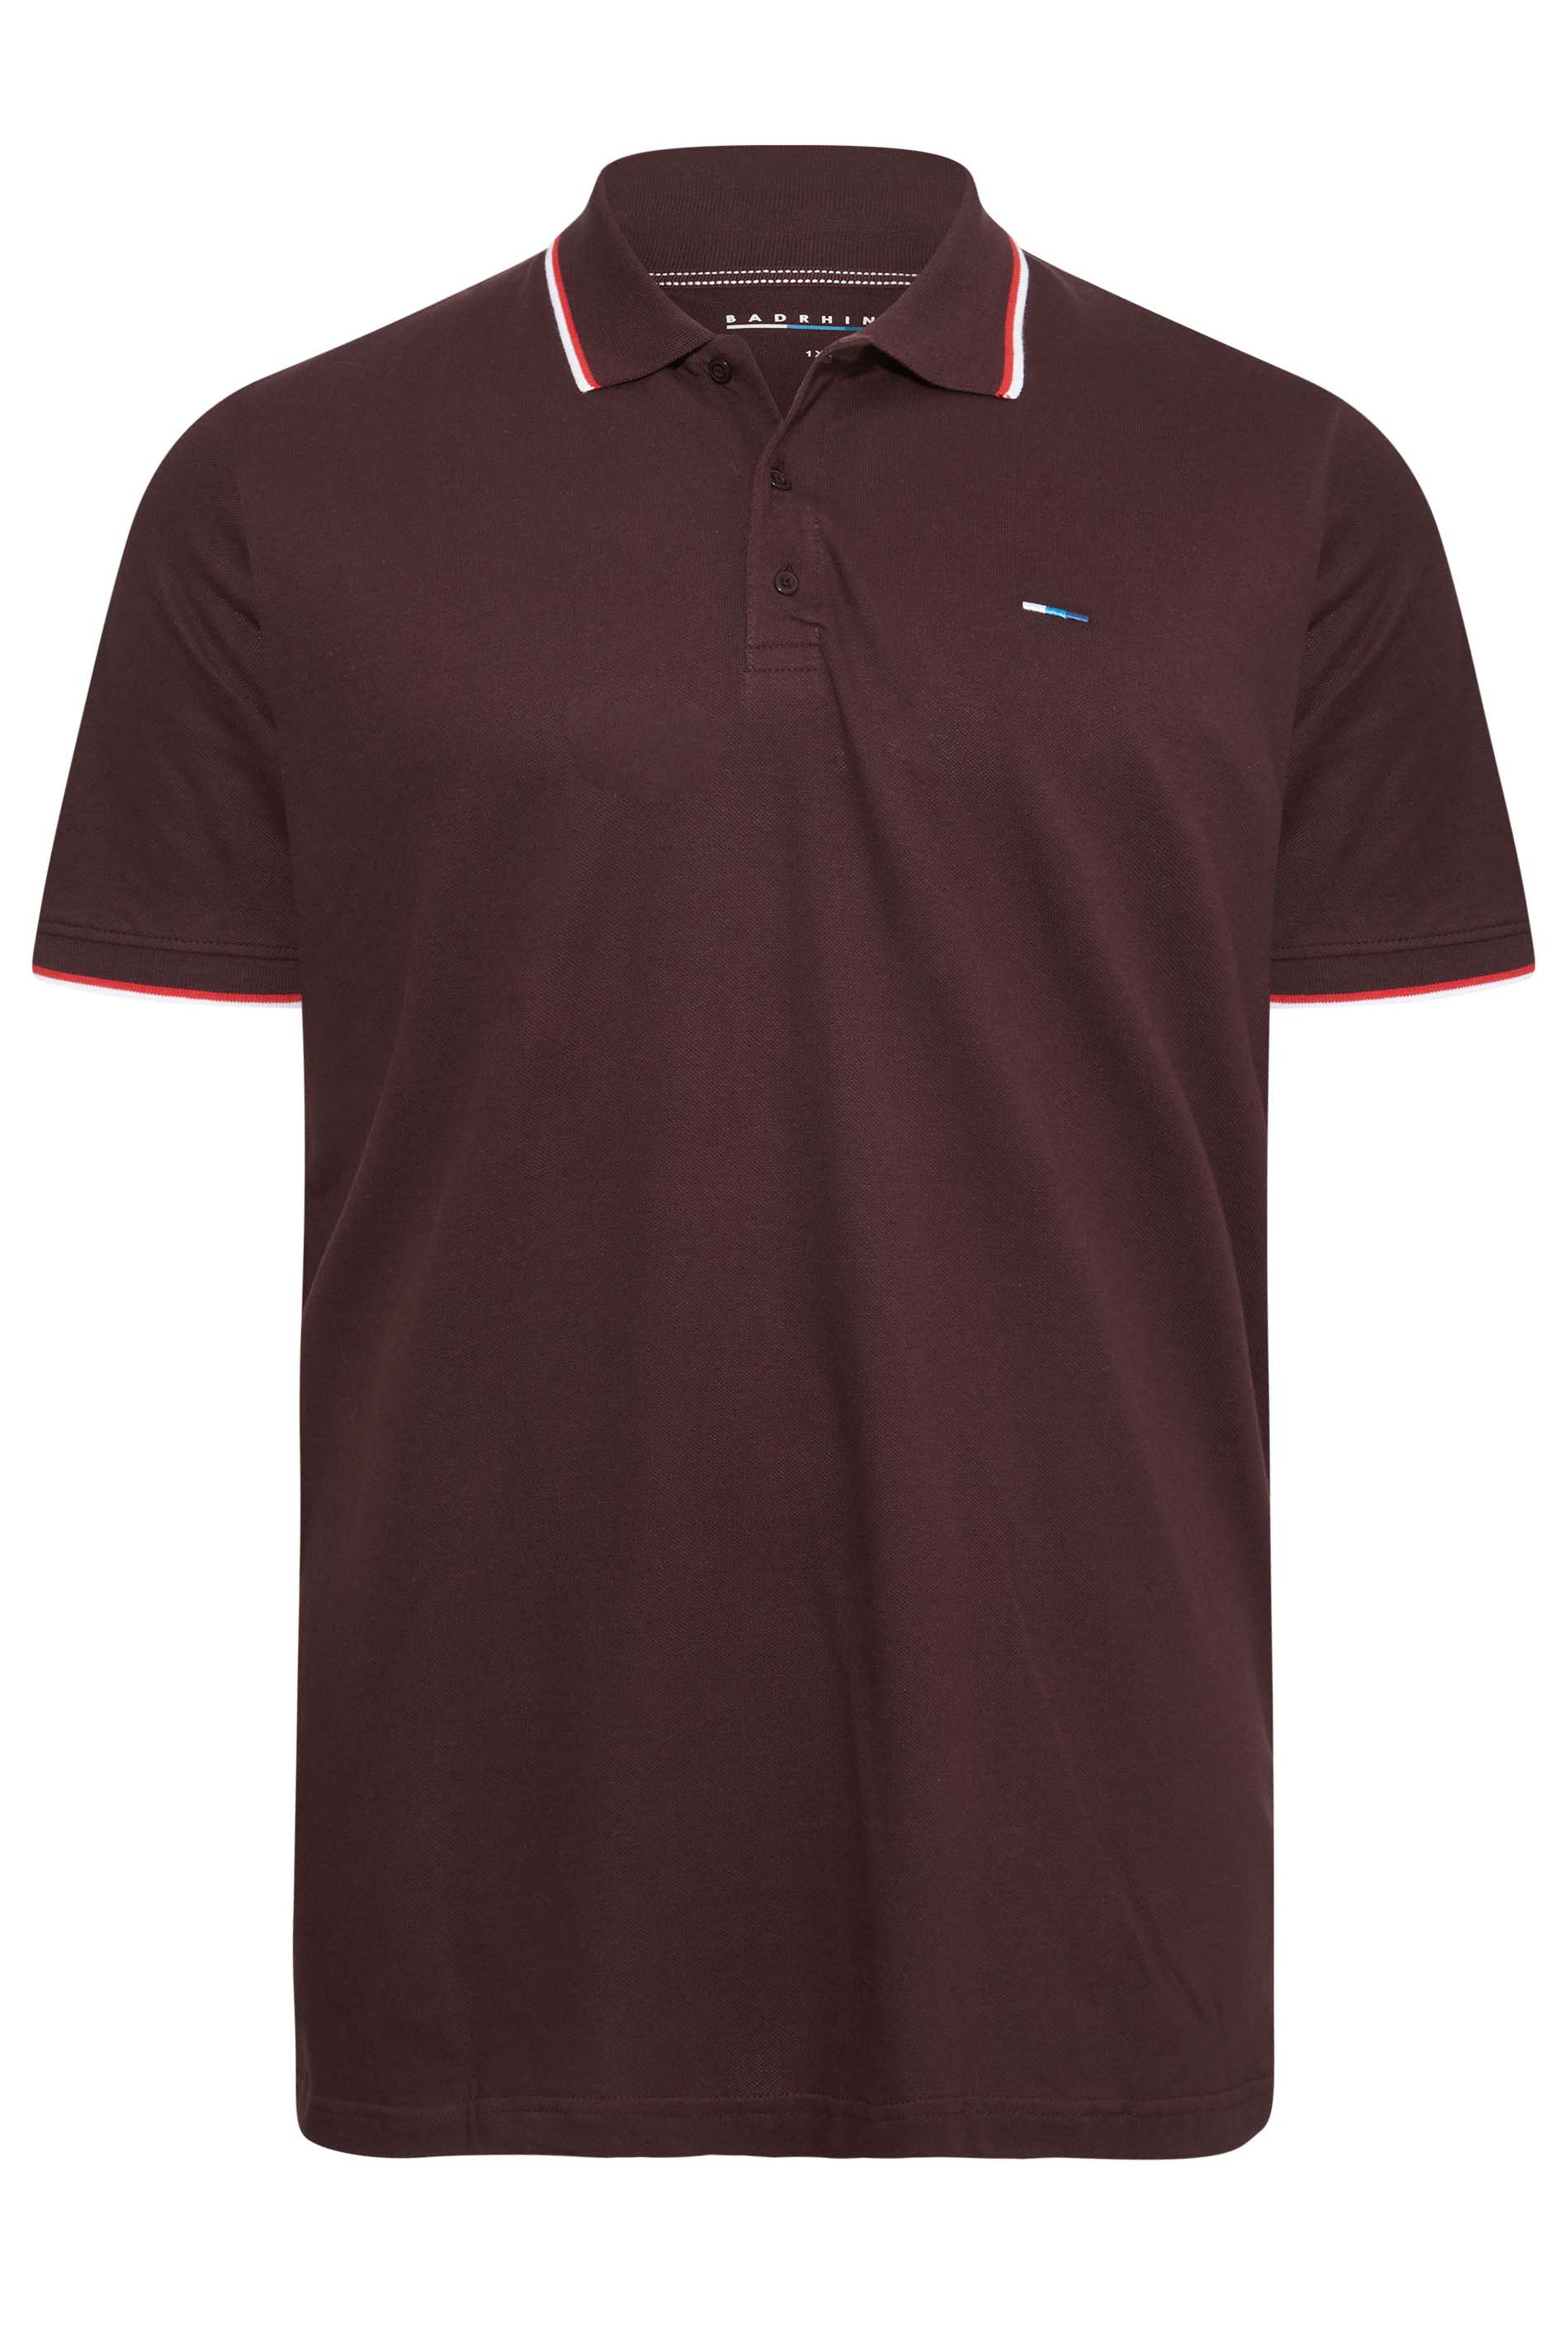 BadRhino Burgundy Red Essential Tipped Polo Shirt | BadRhino